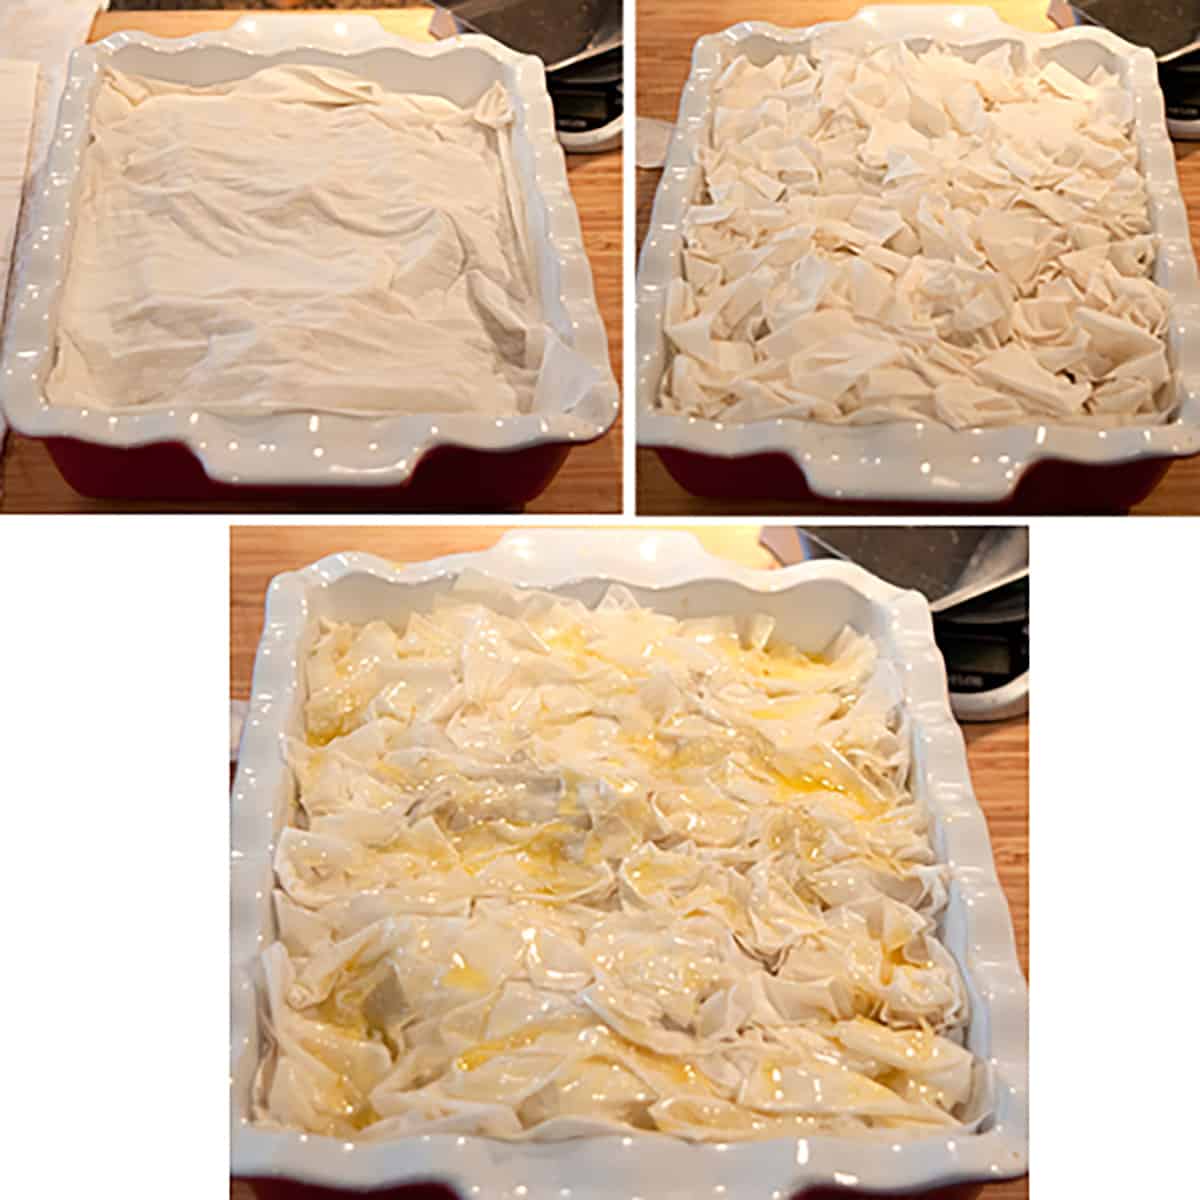 Adding phyllo dough to the baking dish.